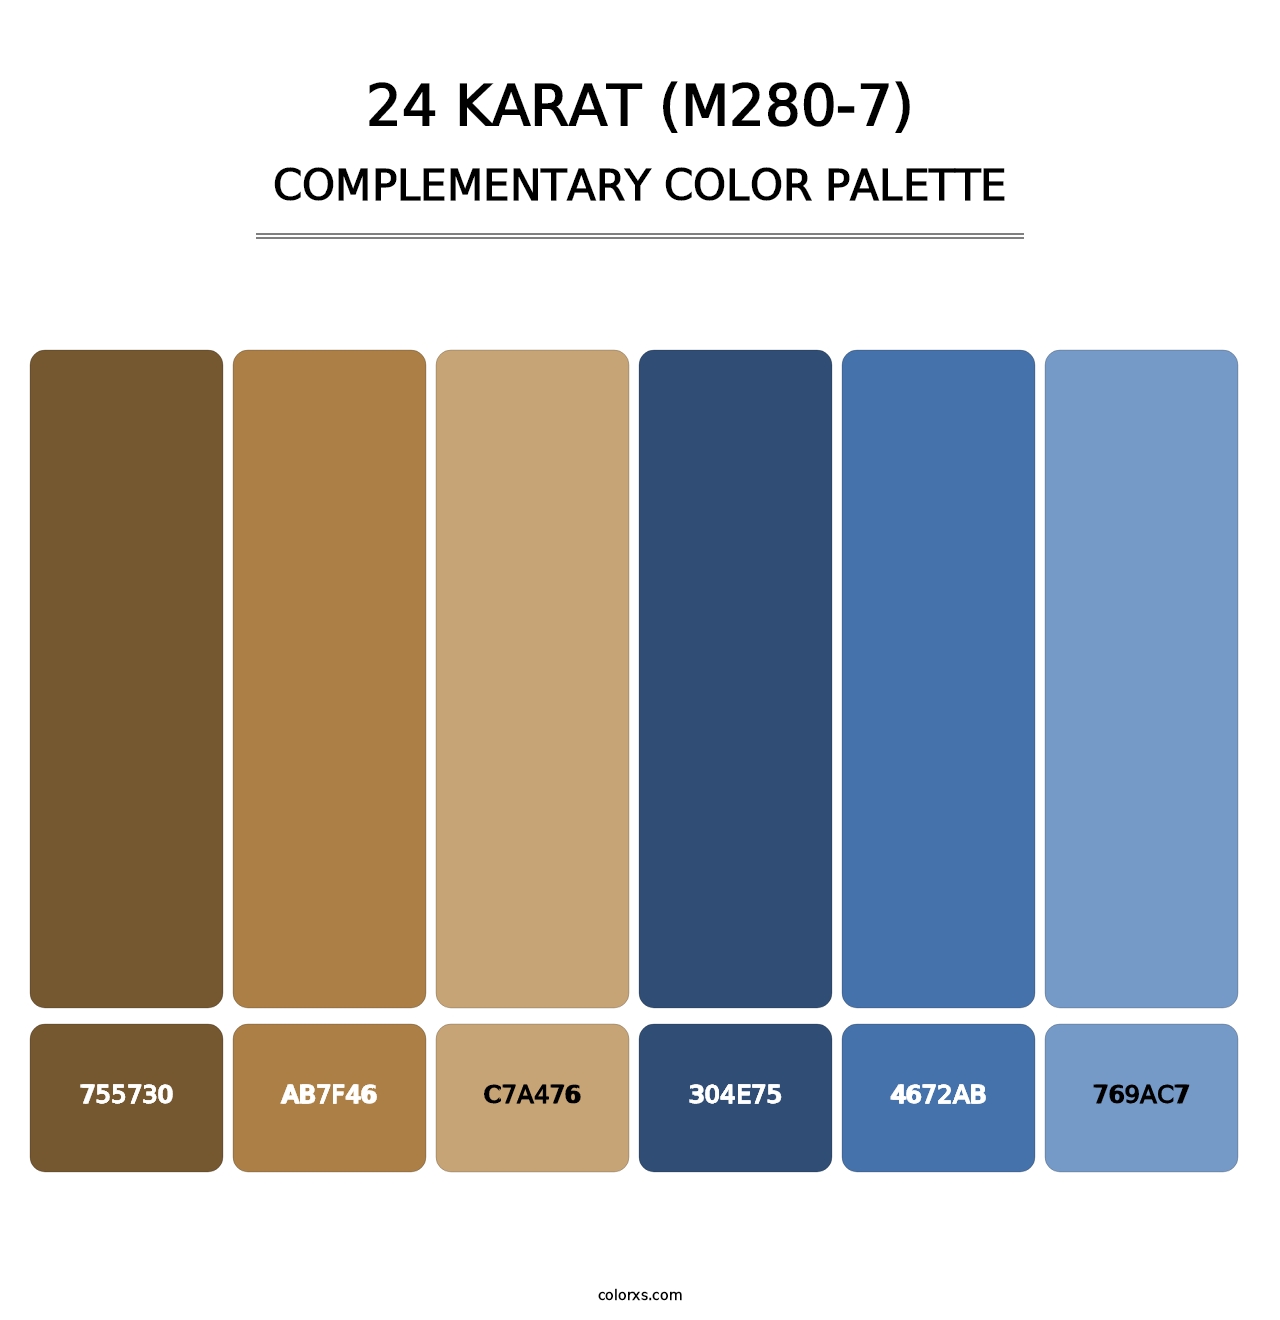 24 Karat (M280-7) - Complementary Color Palette